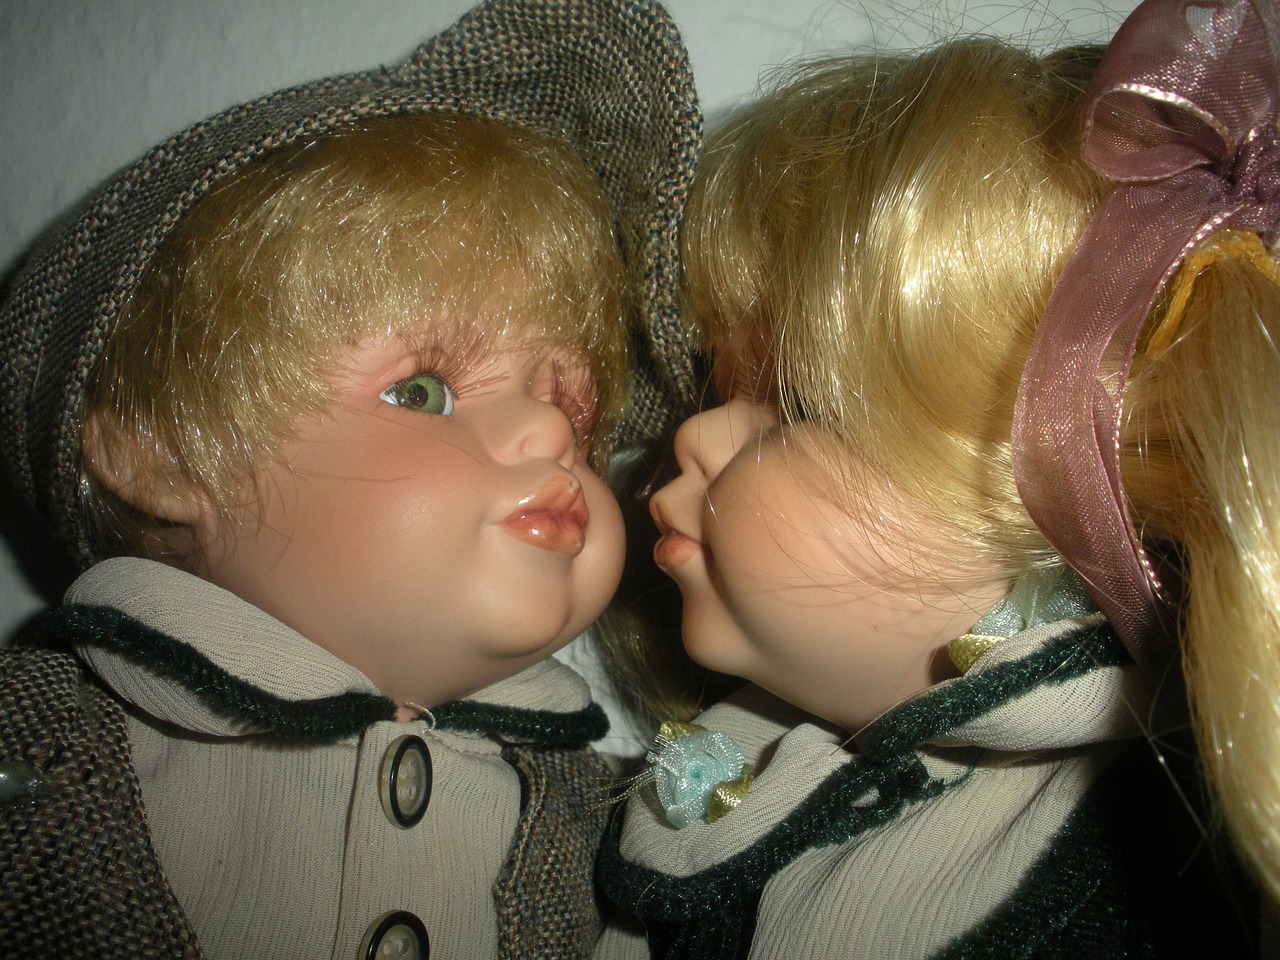 porcelain dolls kissing close-up free photo